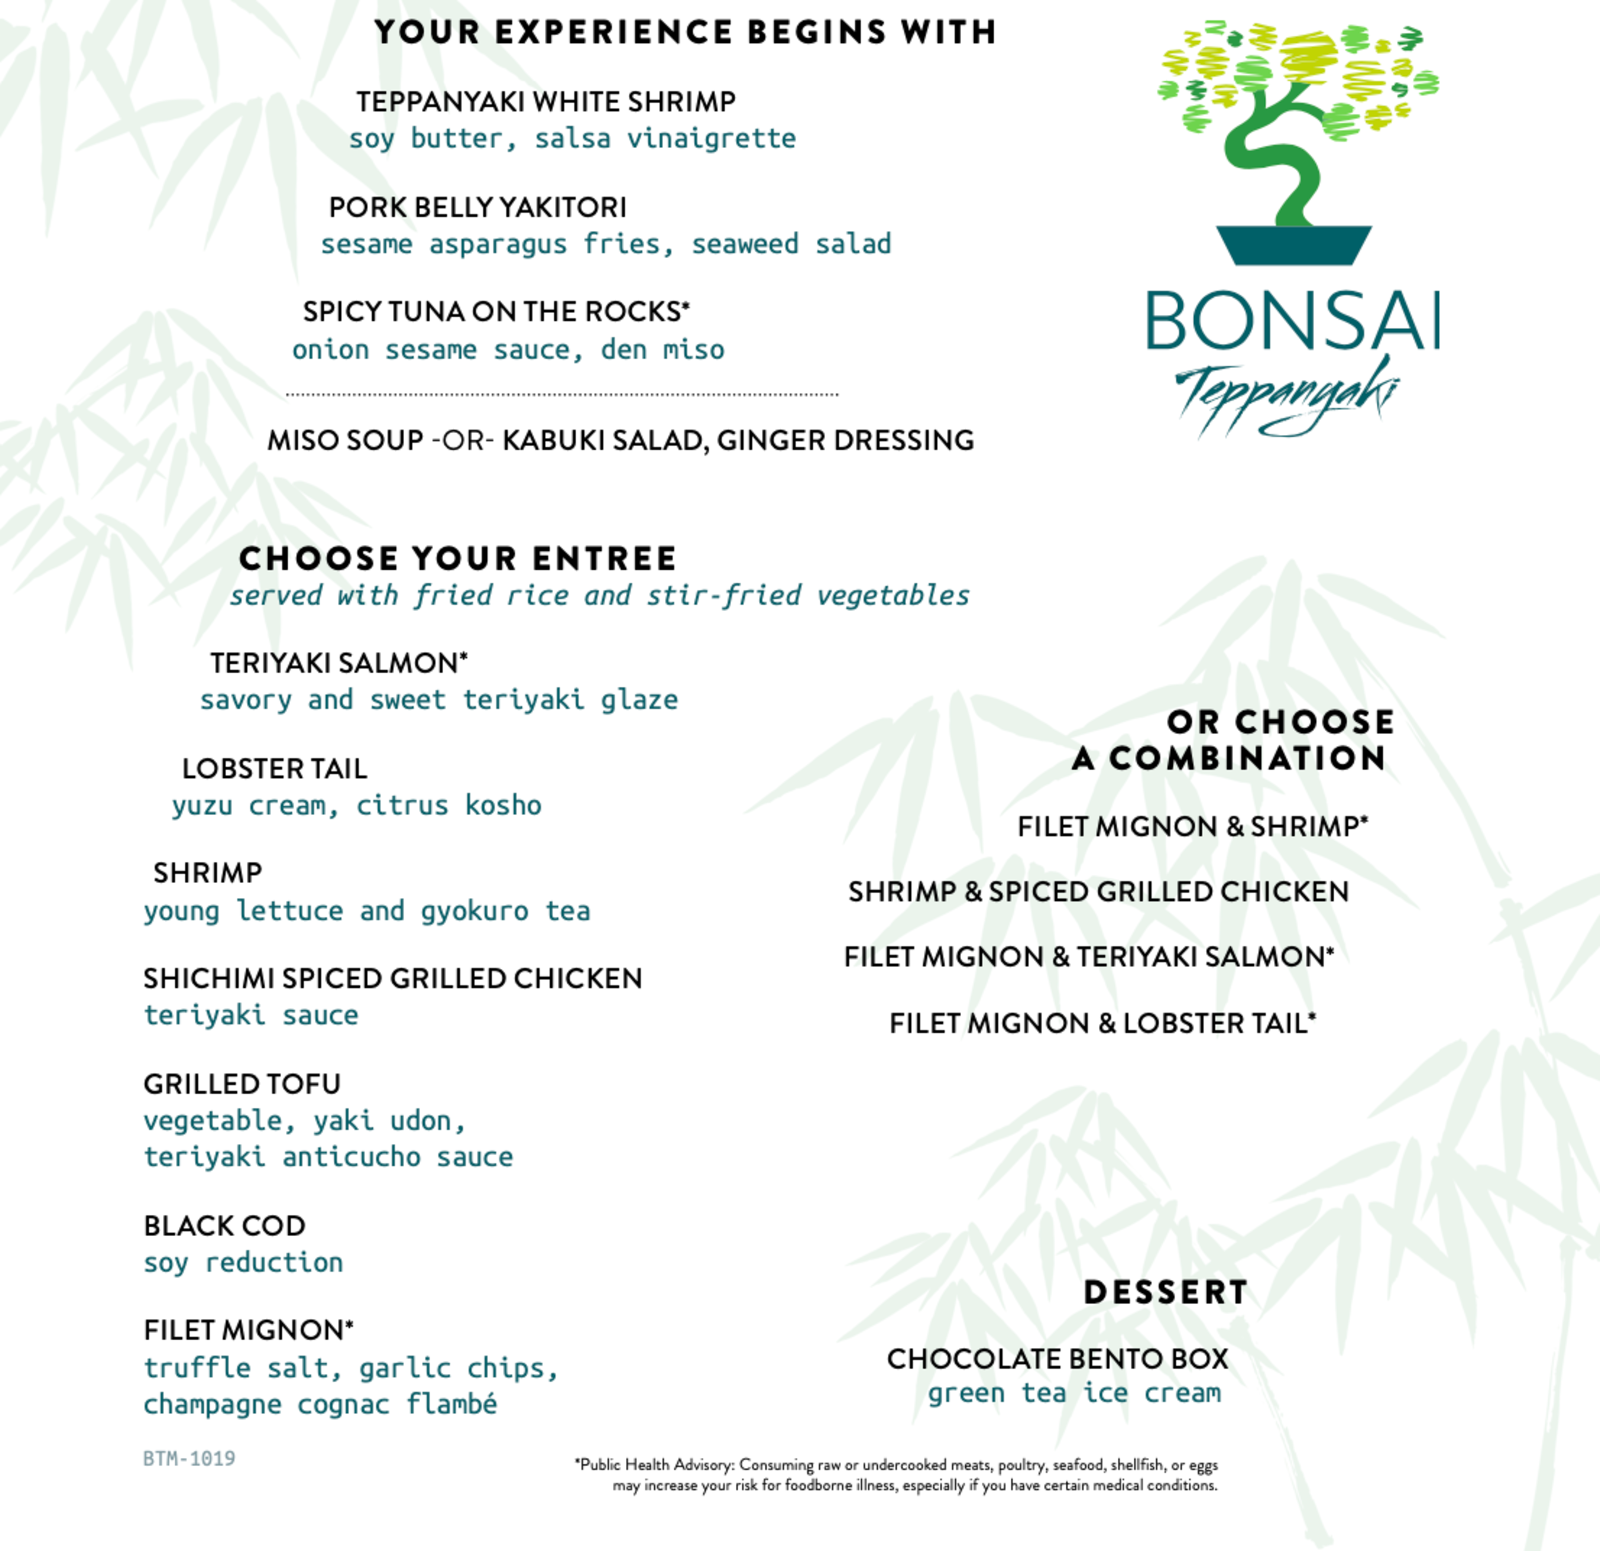 Bonsai Teppanyaki menu on Carnival 